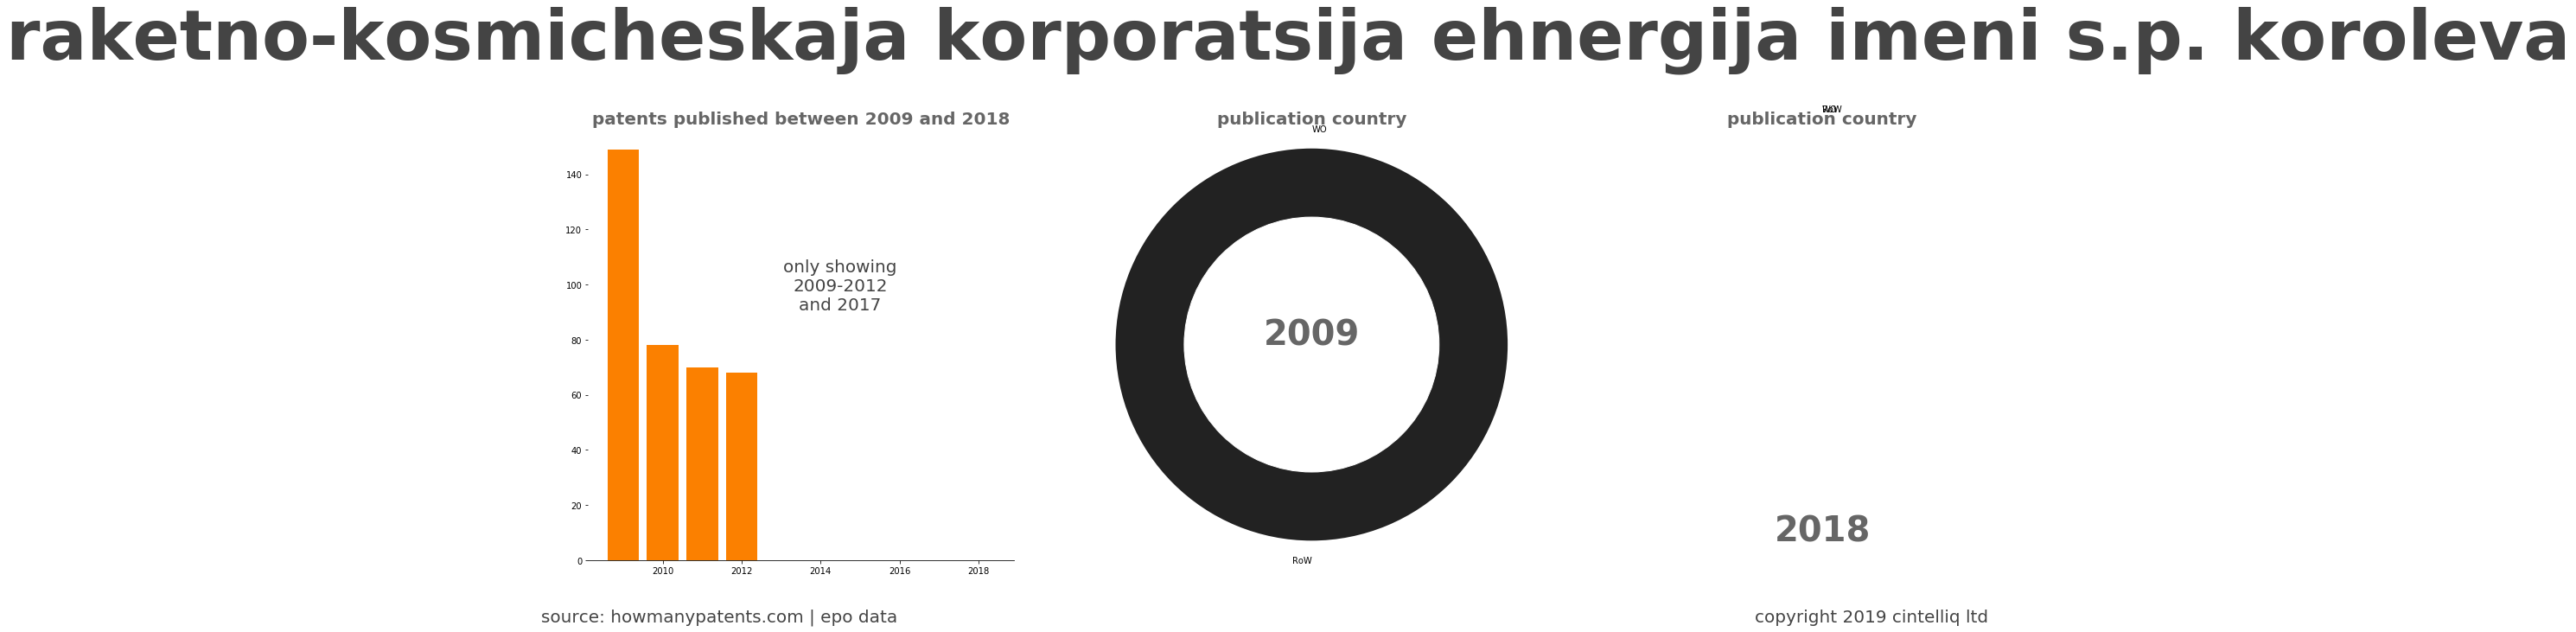 summary of patents for Raketno-Kosmicheskaja Korporatsija Ehnergija Imeni S.P. Koroleva